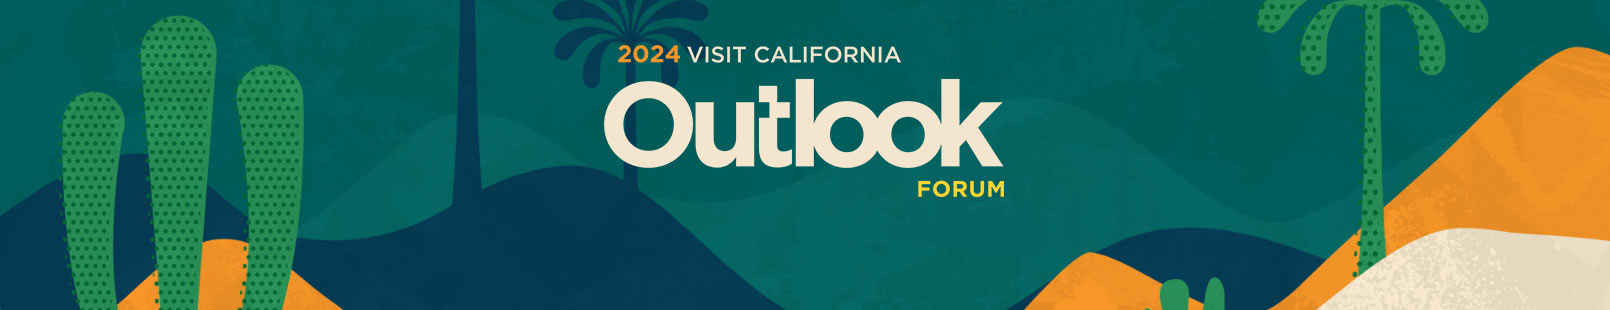 Outlook Forum Visit CA